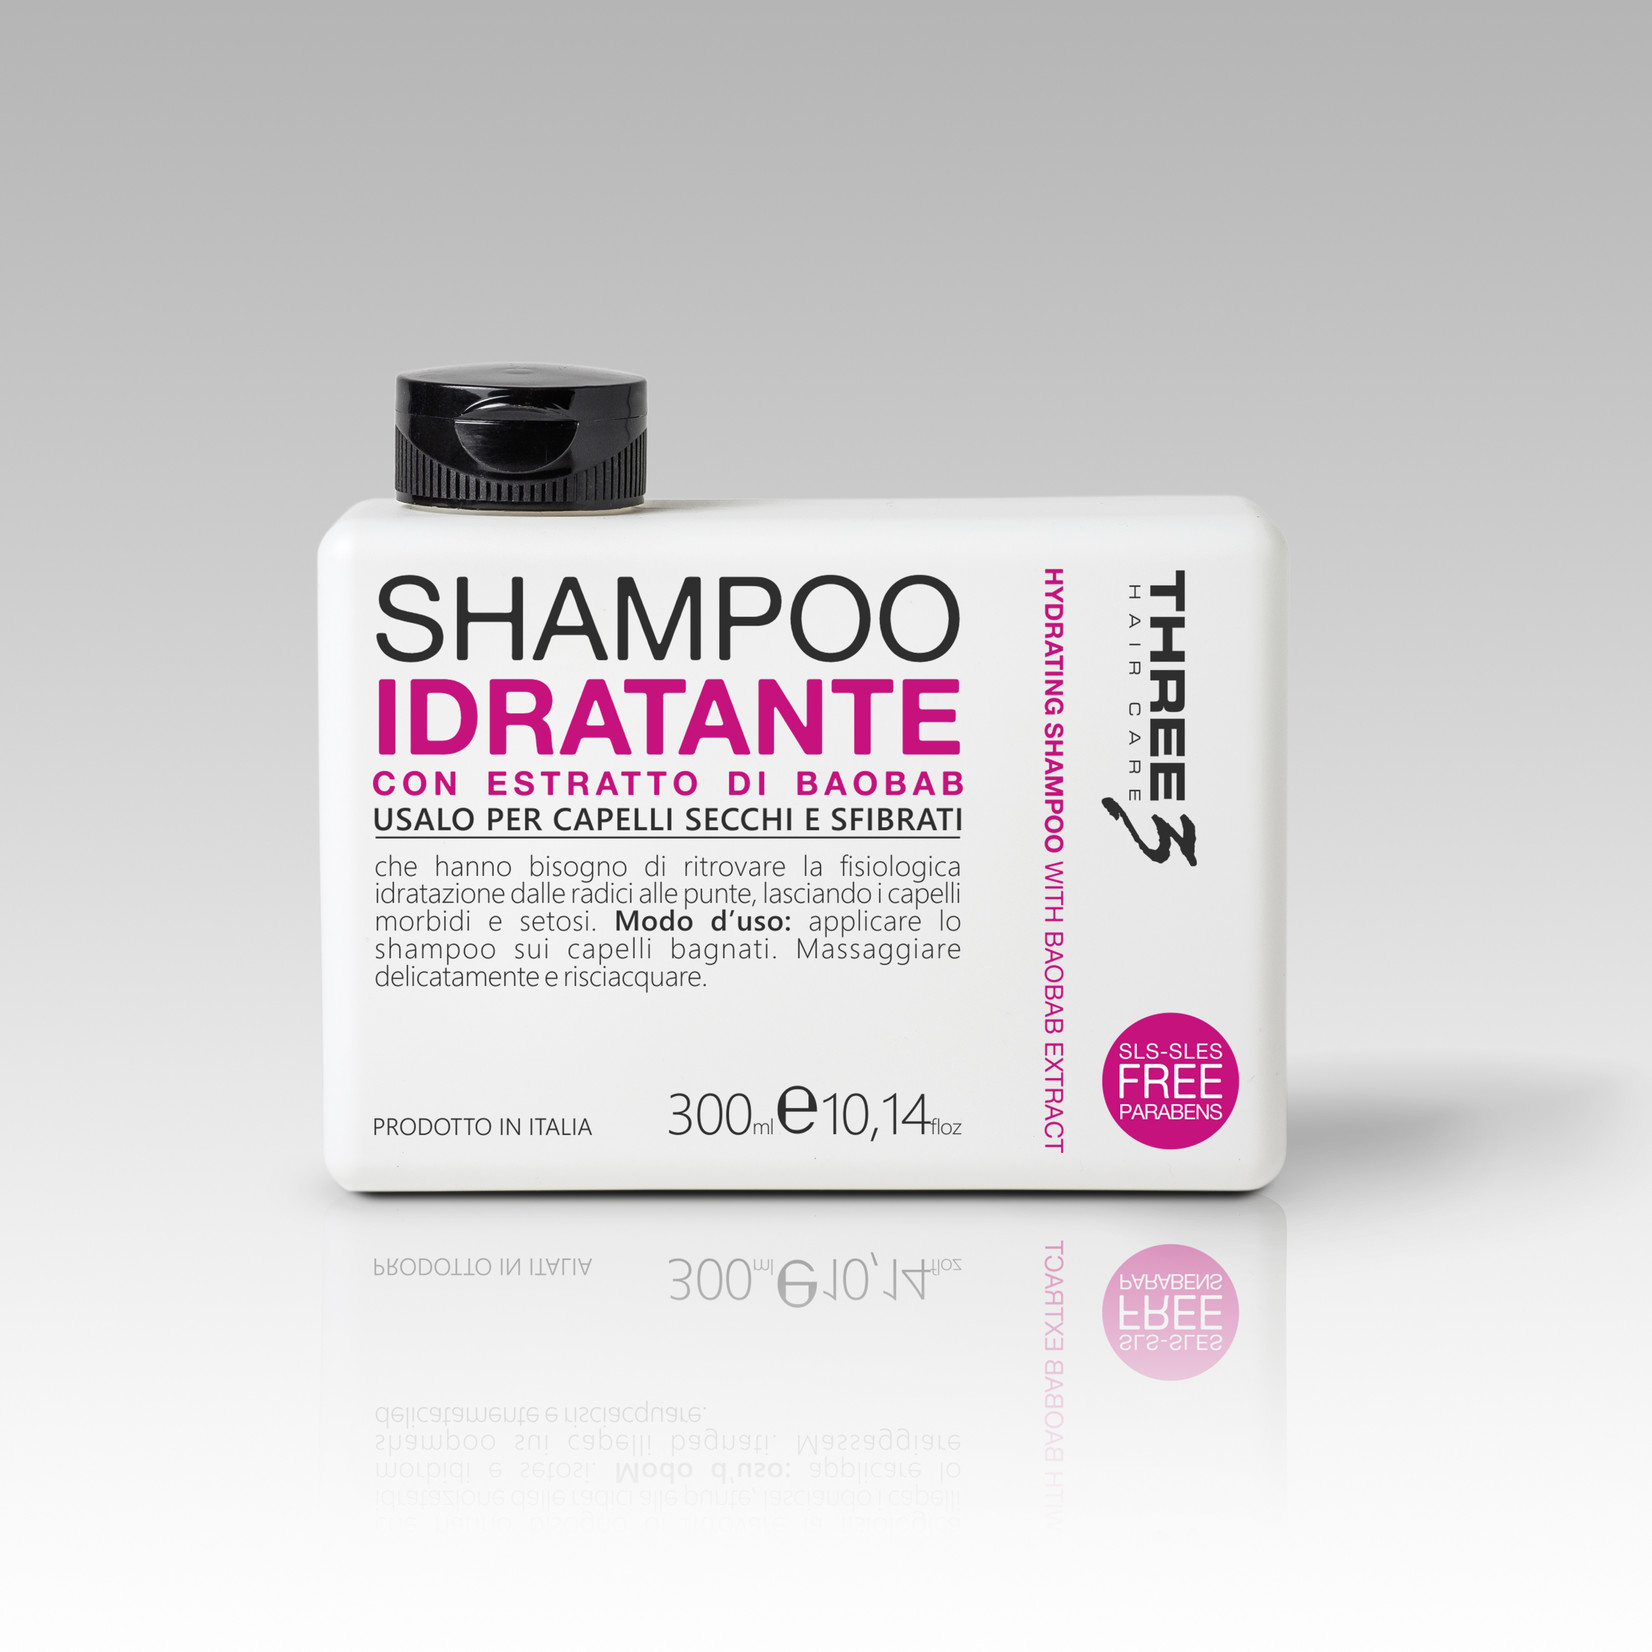 Faipa Three Shampoo Idratante 300ml